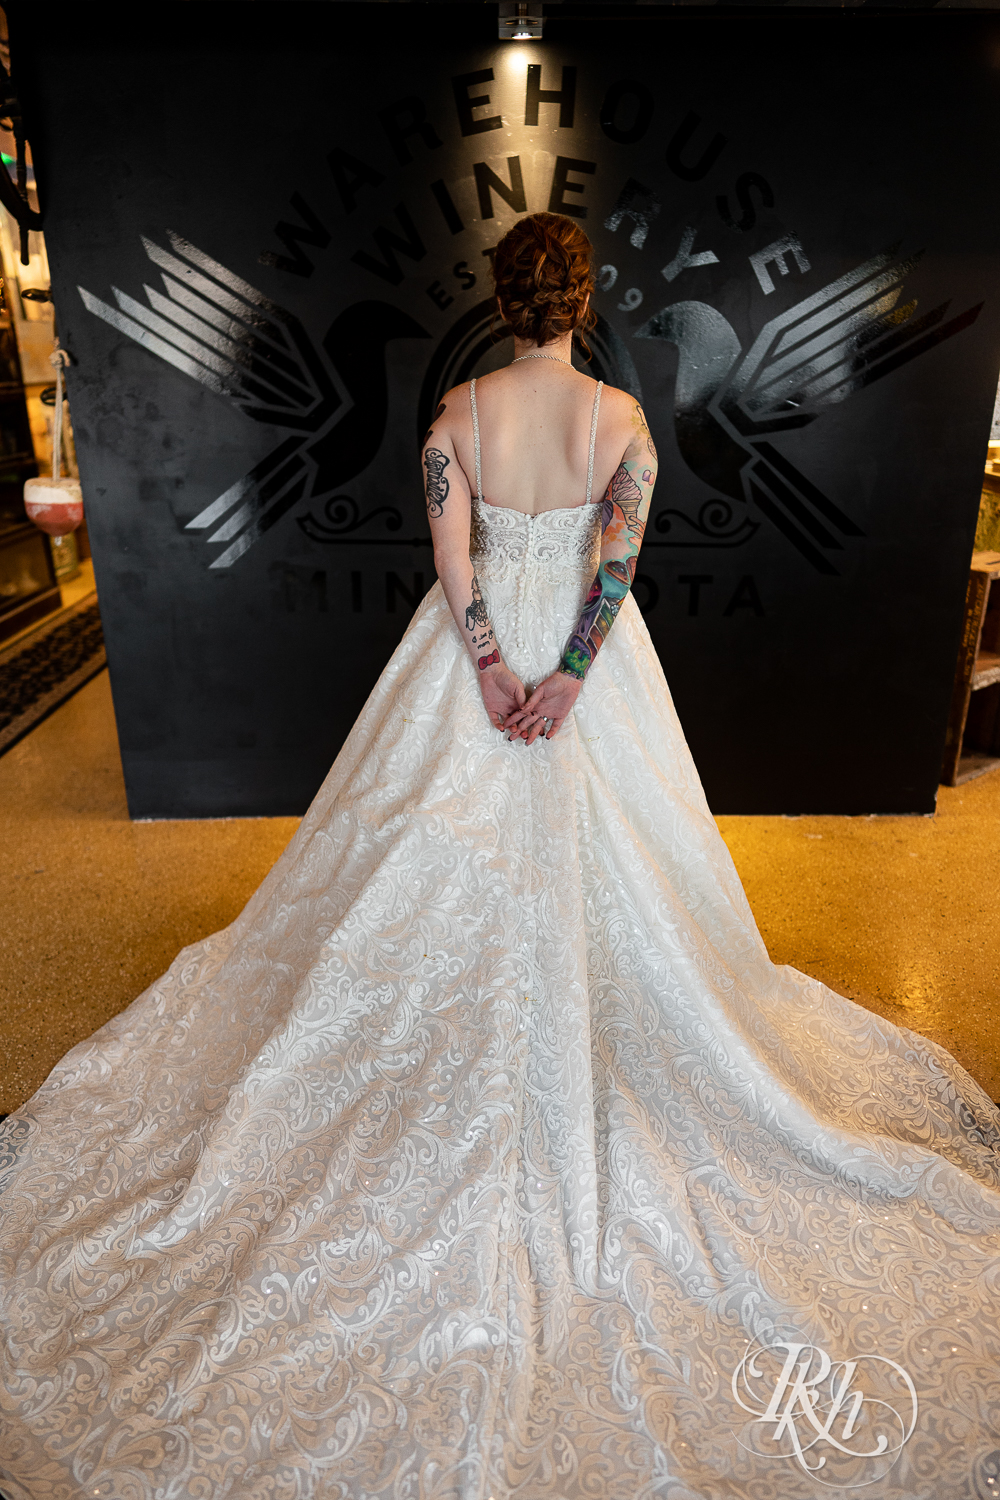 Tattooed bride at Warehouse Winery in Saint Louis Park, Minnesota.